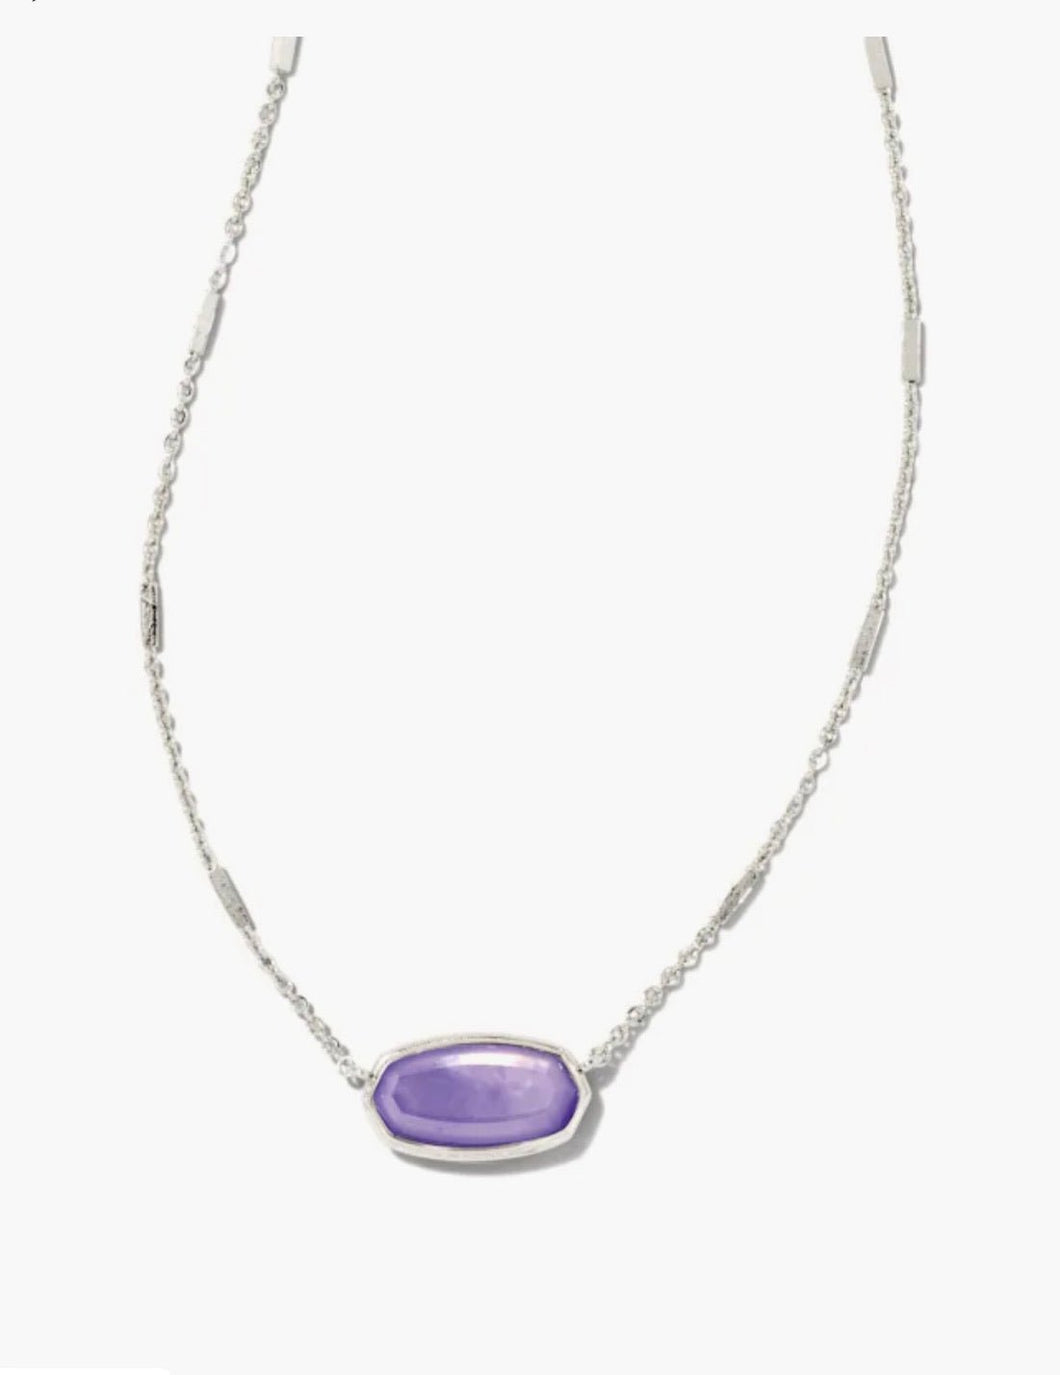 Kendra Scott-Framed Elisa Silver Metal Short Pendant Necklace in Lavender Opalite Illusion 9608803392